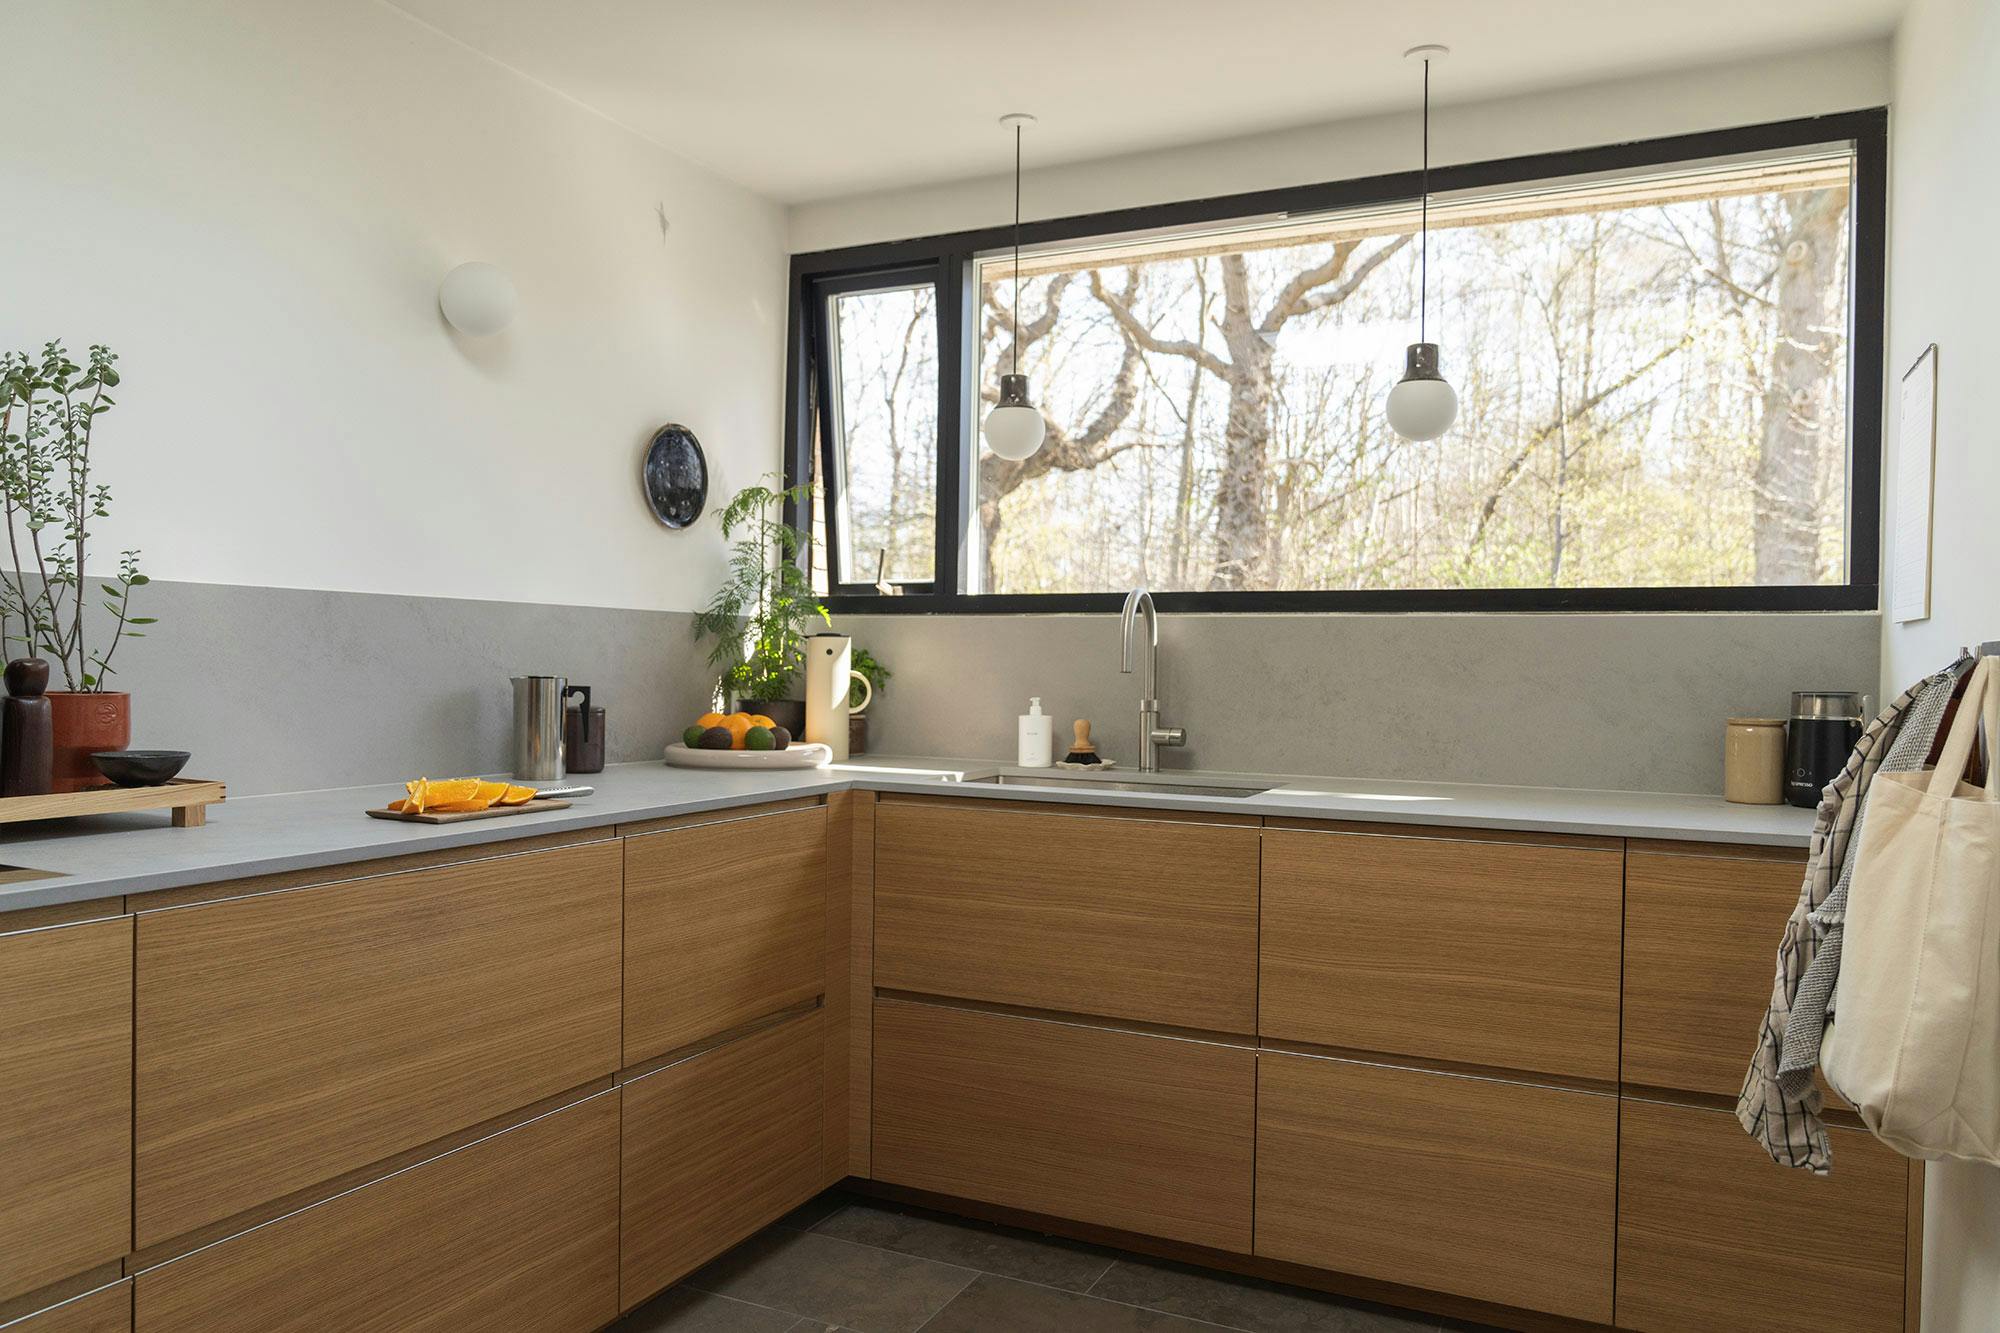 Imagem número 33 da actual secção de Dekton Arga creates an elegant atmosphere in this open plan kitchen with a minimalist approach da Cosentino Portugal